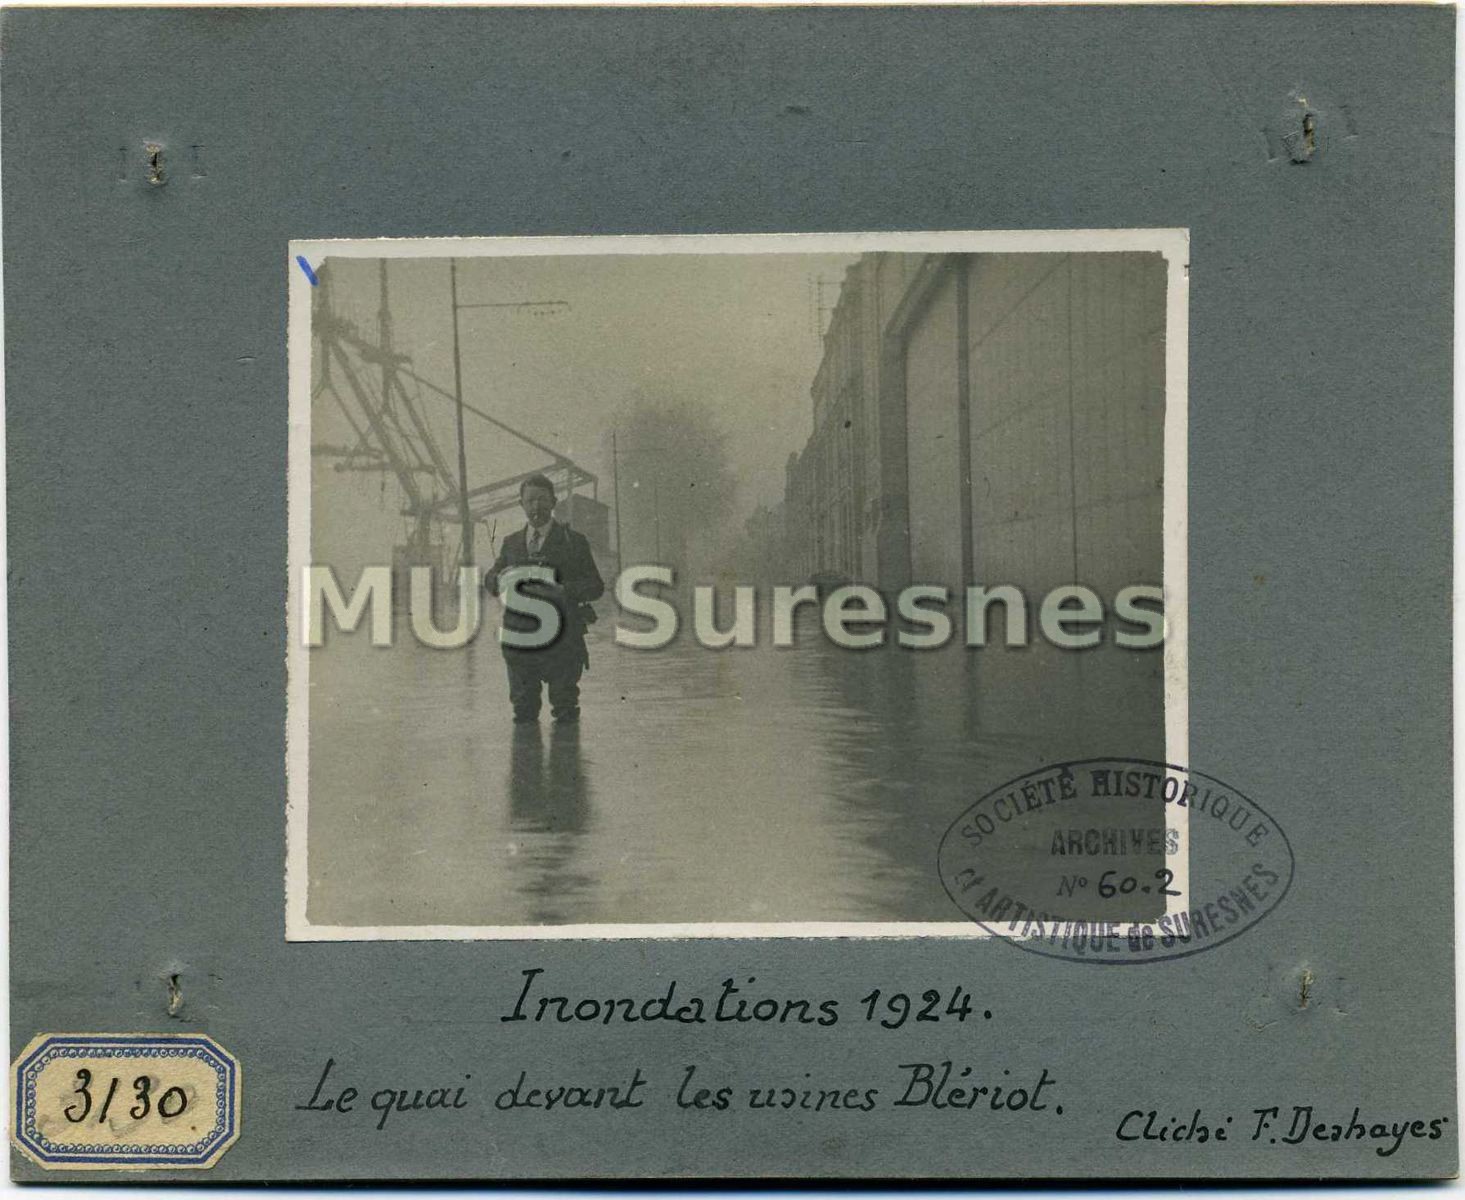 Inondations 1924, Le quai devant les usines Blériot